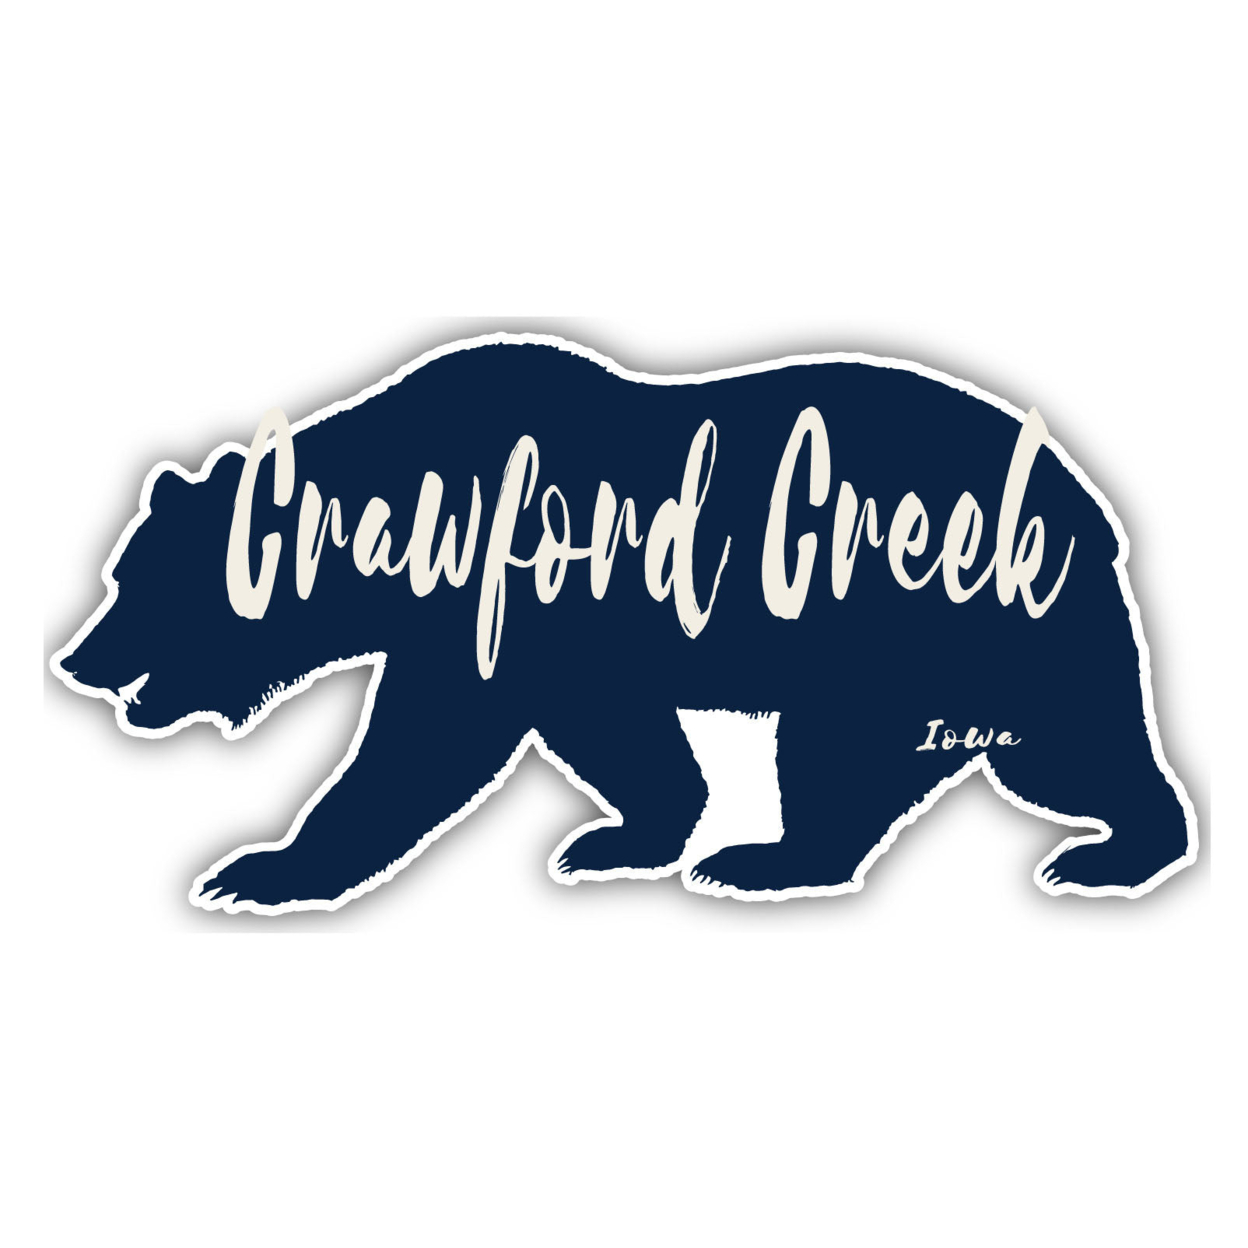 Crawford Creek Iowa Souvenir Decorative Stickers (Choose Theme And Size) - 4-Pack, 8-Inch, Bear